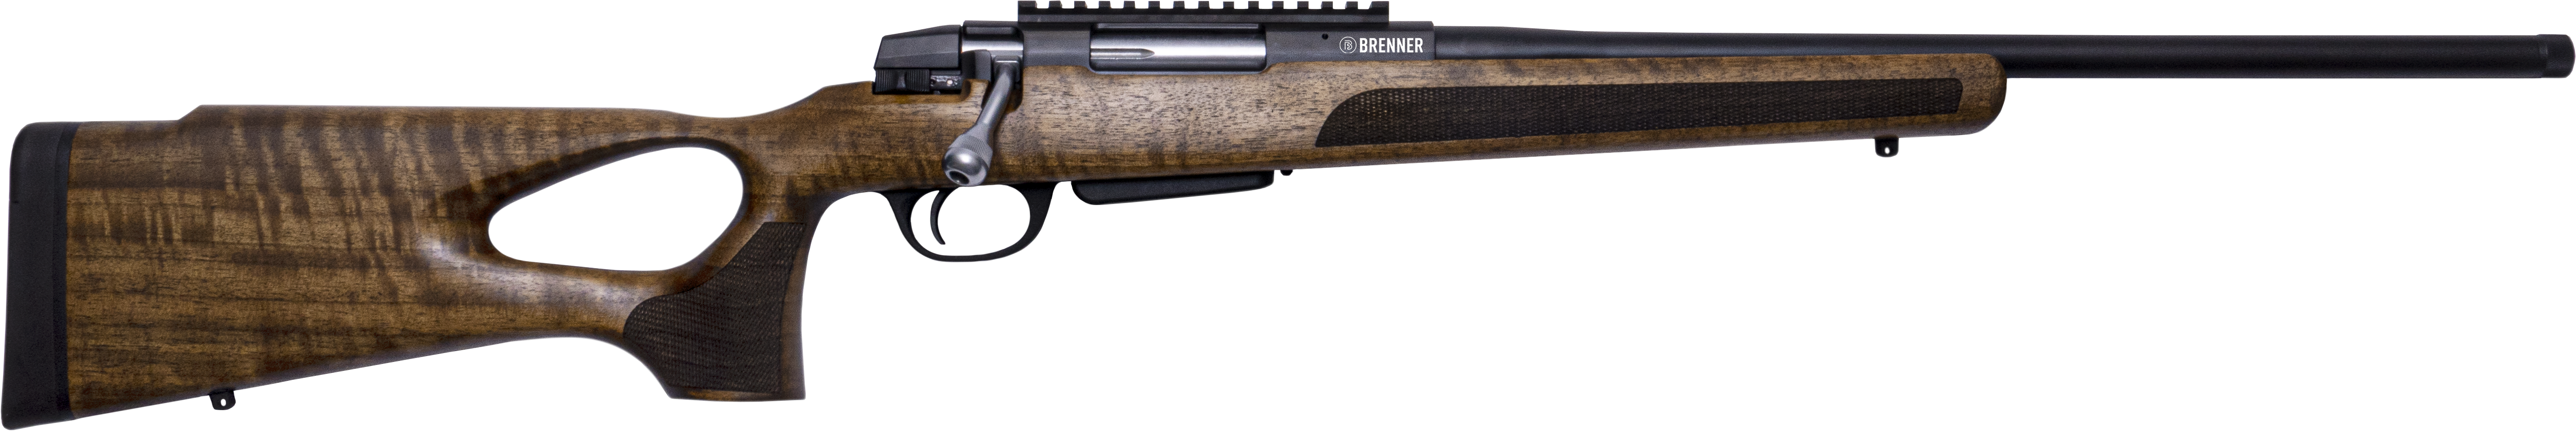 brenner-br20-thumbole-308-win-51cm-wood